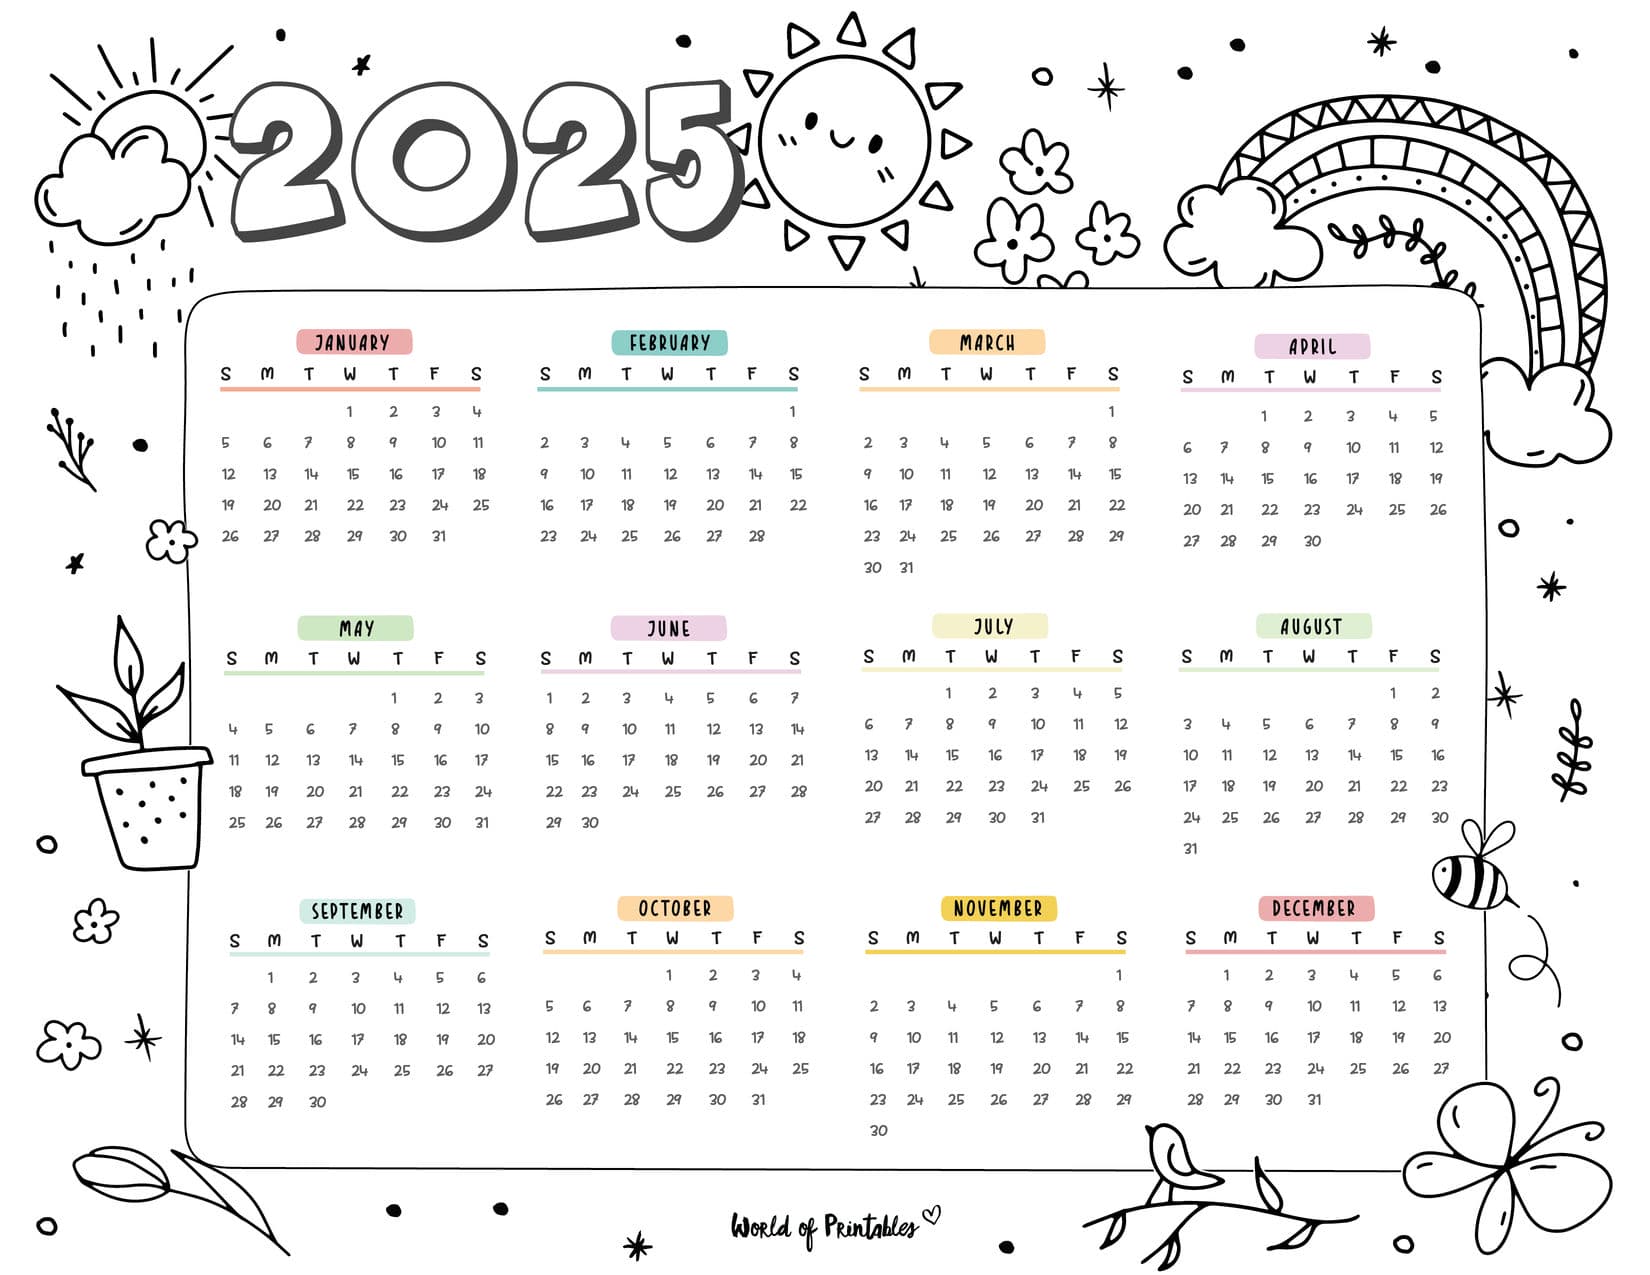 Calendar 2025 Wallpapers Wallpaper Cave